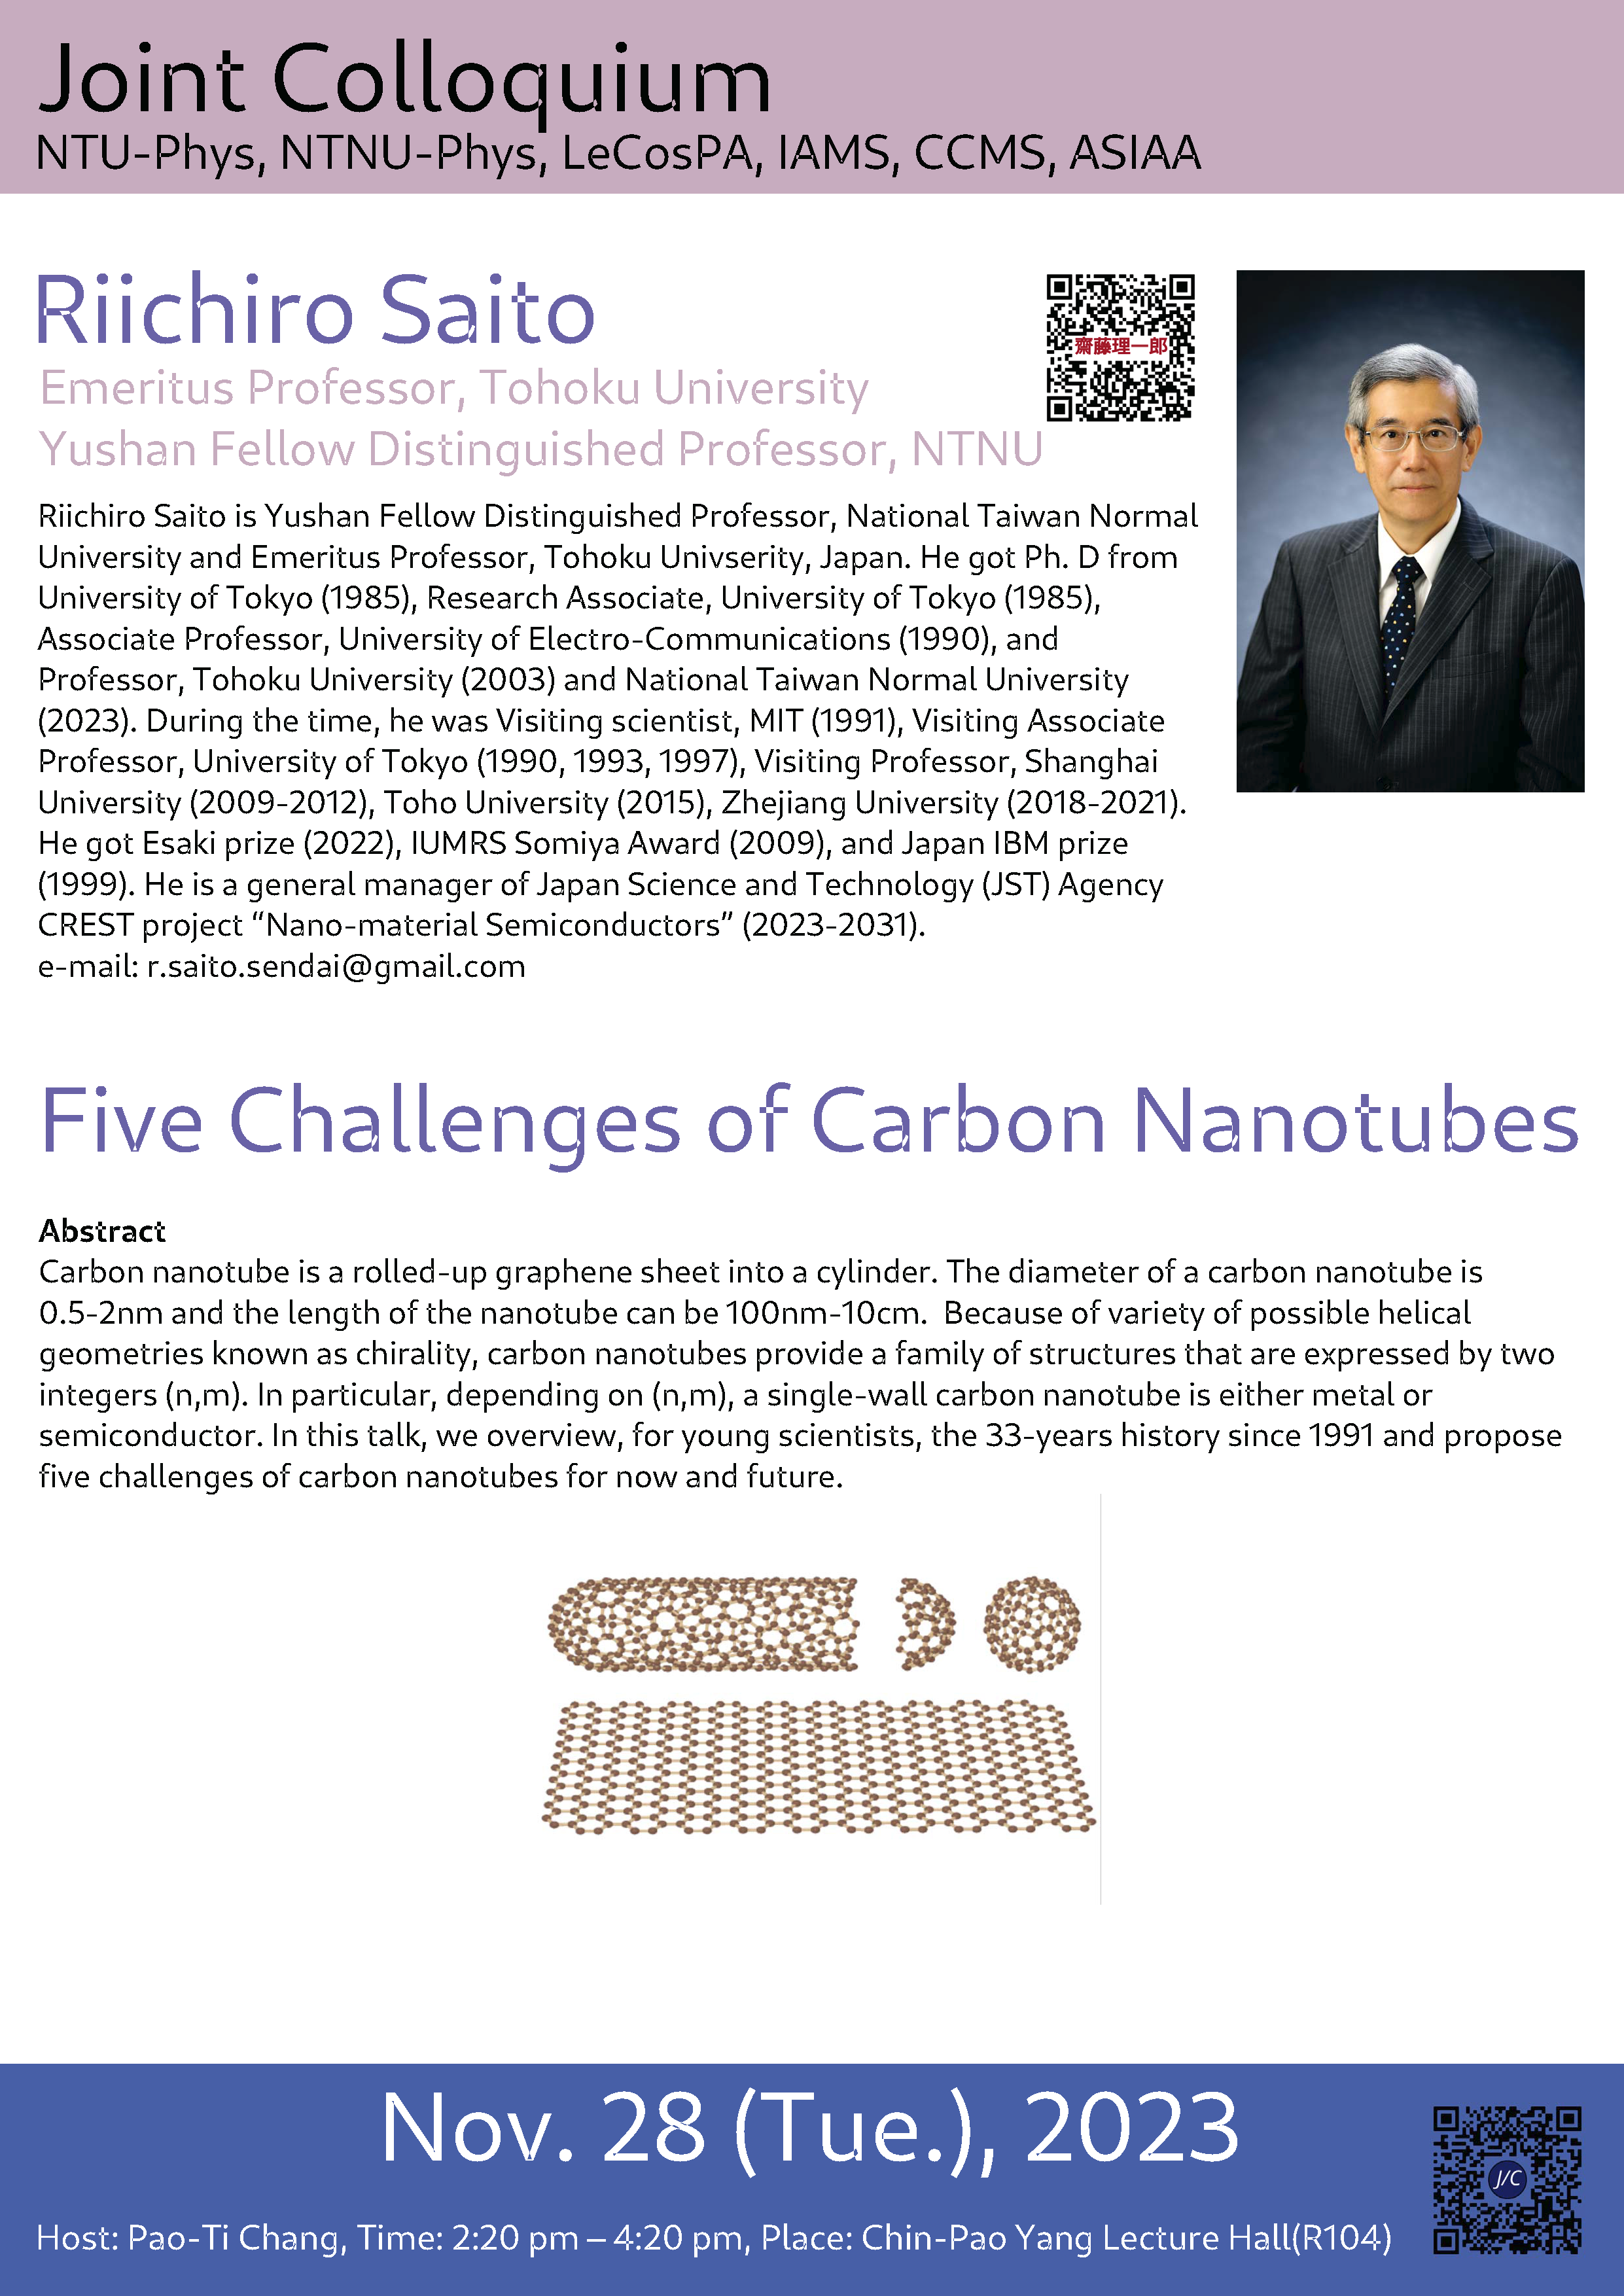 Five Challenges of Carbon Nanotubes